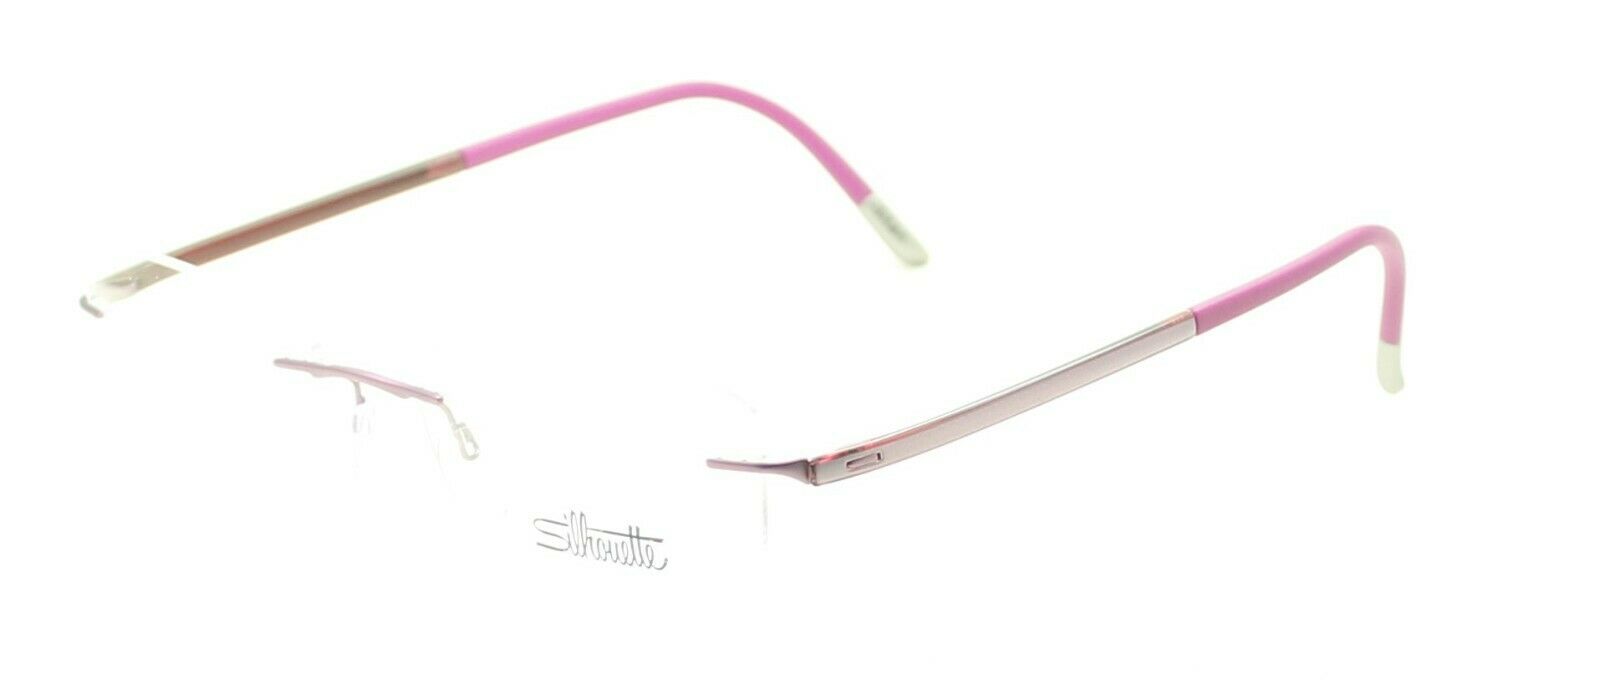 SILHOUETTE 4525 40 6058 Eyewear FRAMES RX Optical Eyeglasses Glasses AUSTRIA New